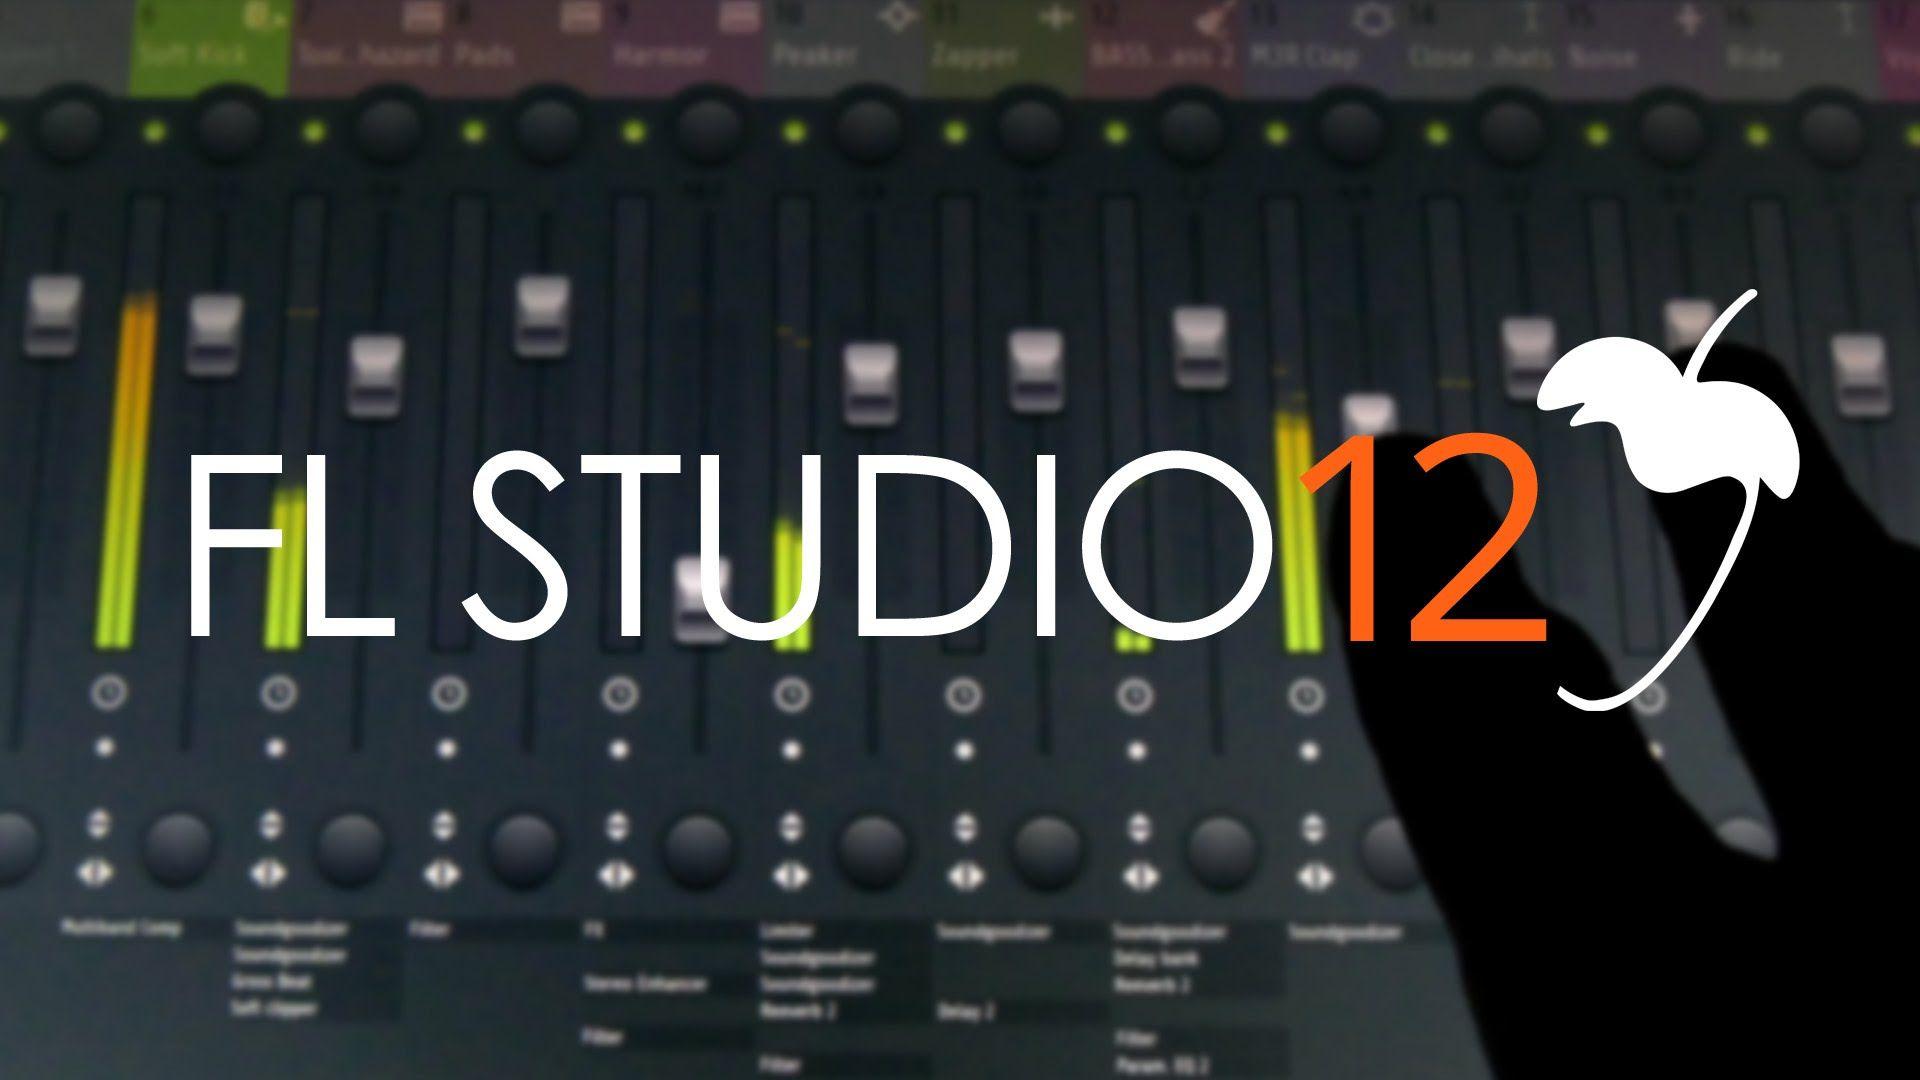 fl studio 12 full download free for mac